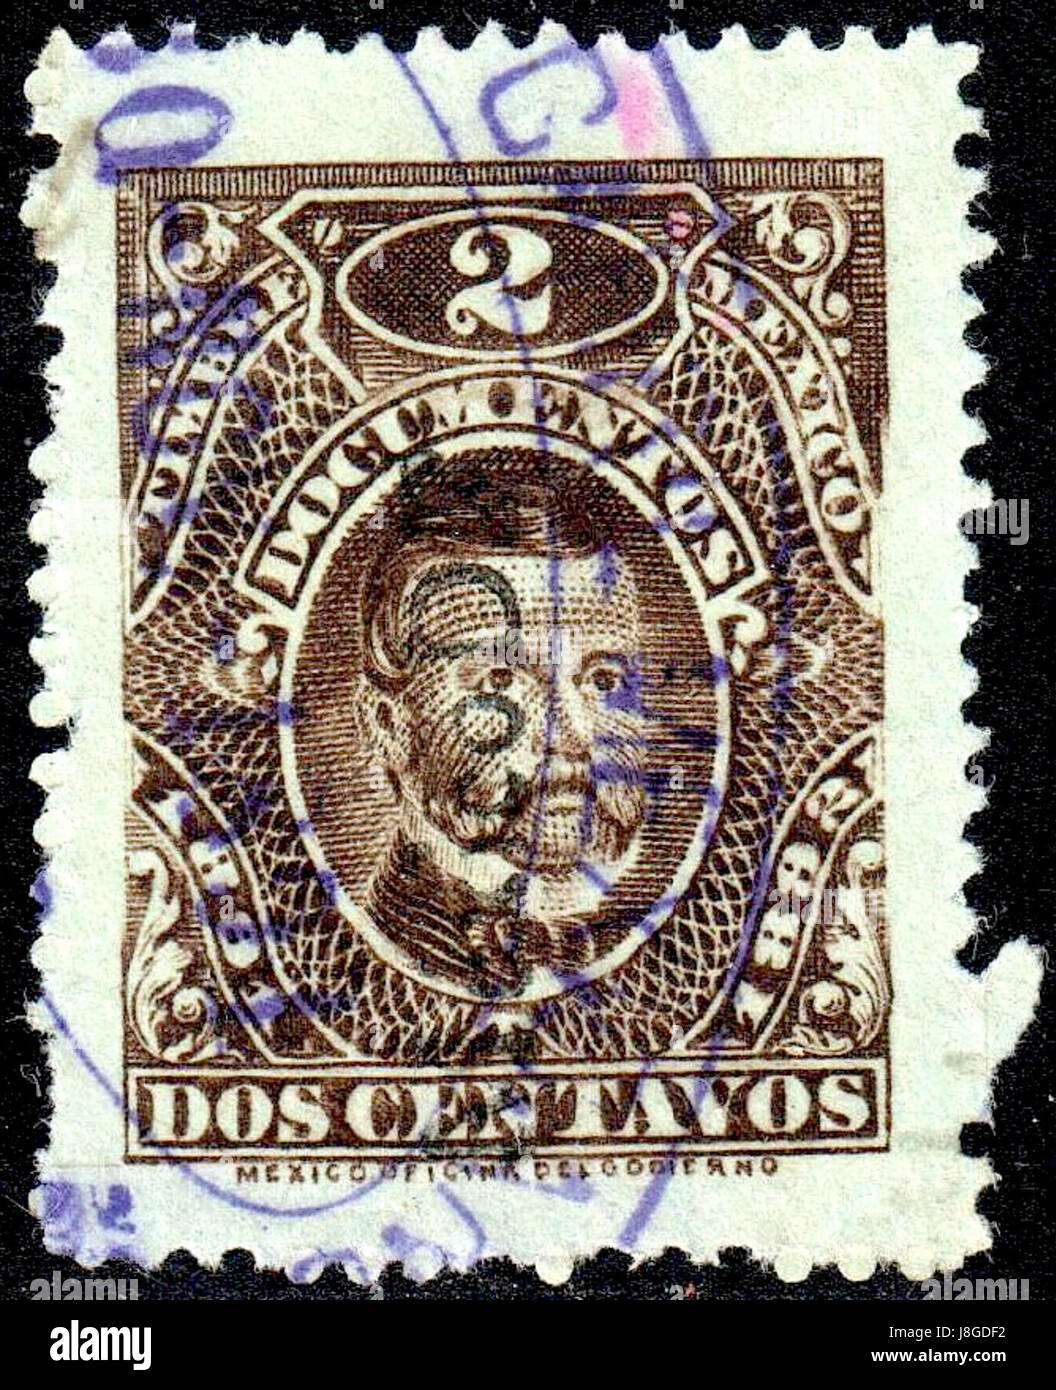 Mexico 1891 92 documents revenue F195 Mexico DF Stock Photo